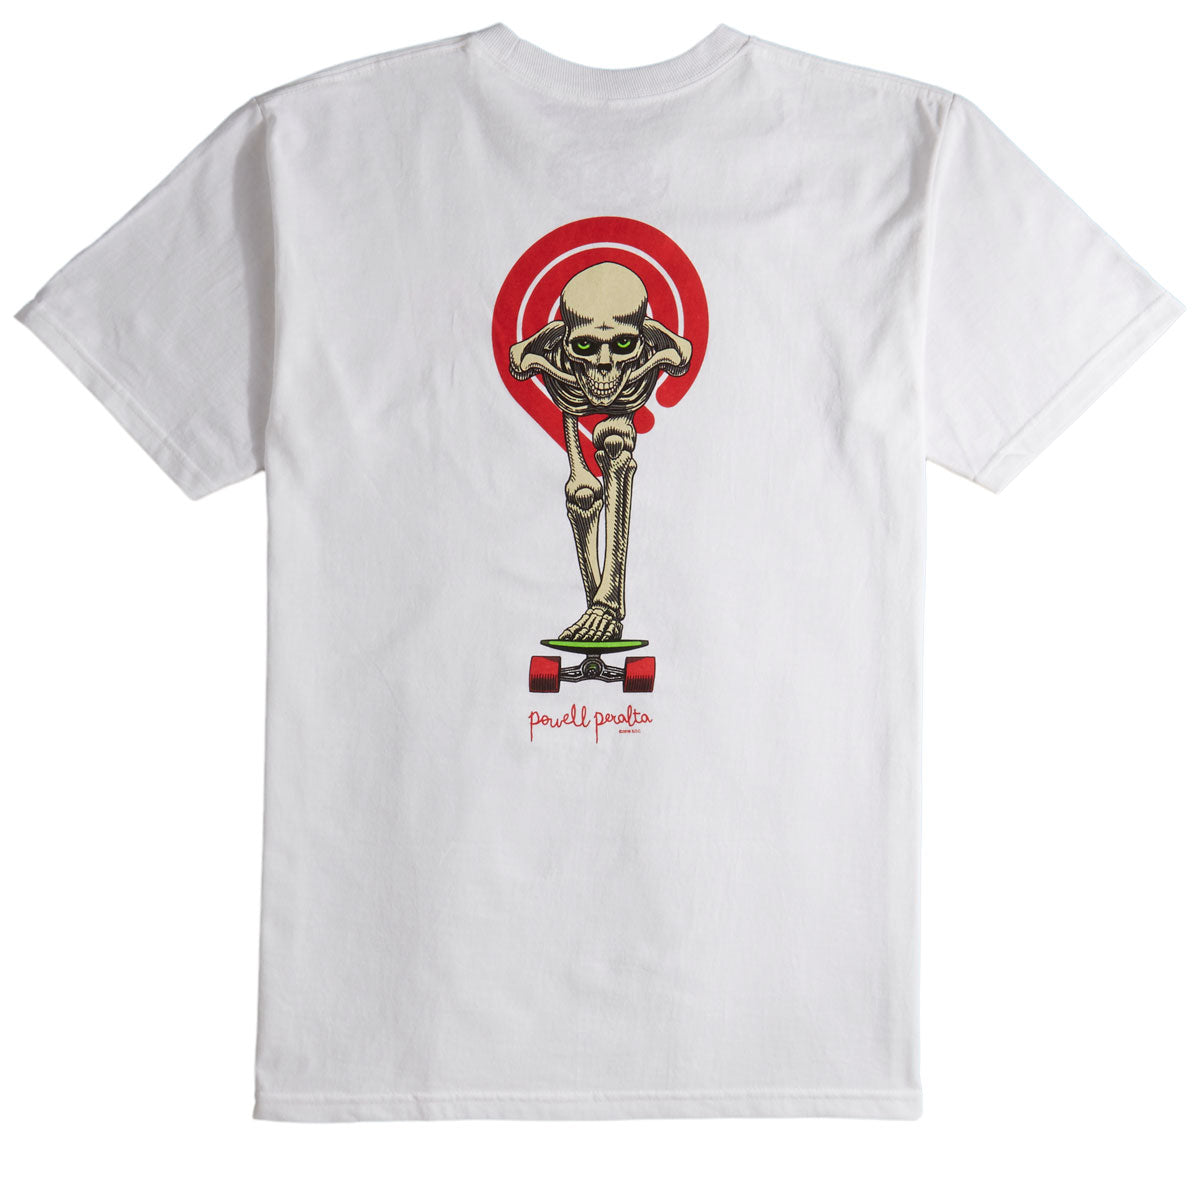 Powell-Peralta Tucking Skeleton T-Shirt - White image 2